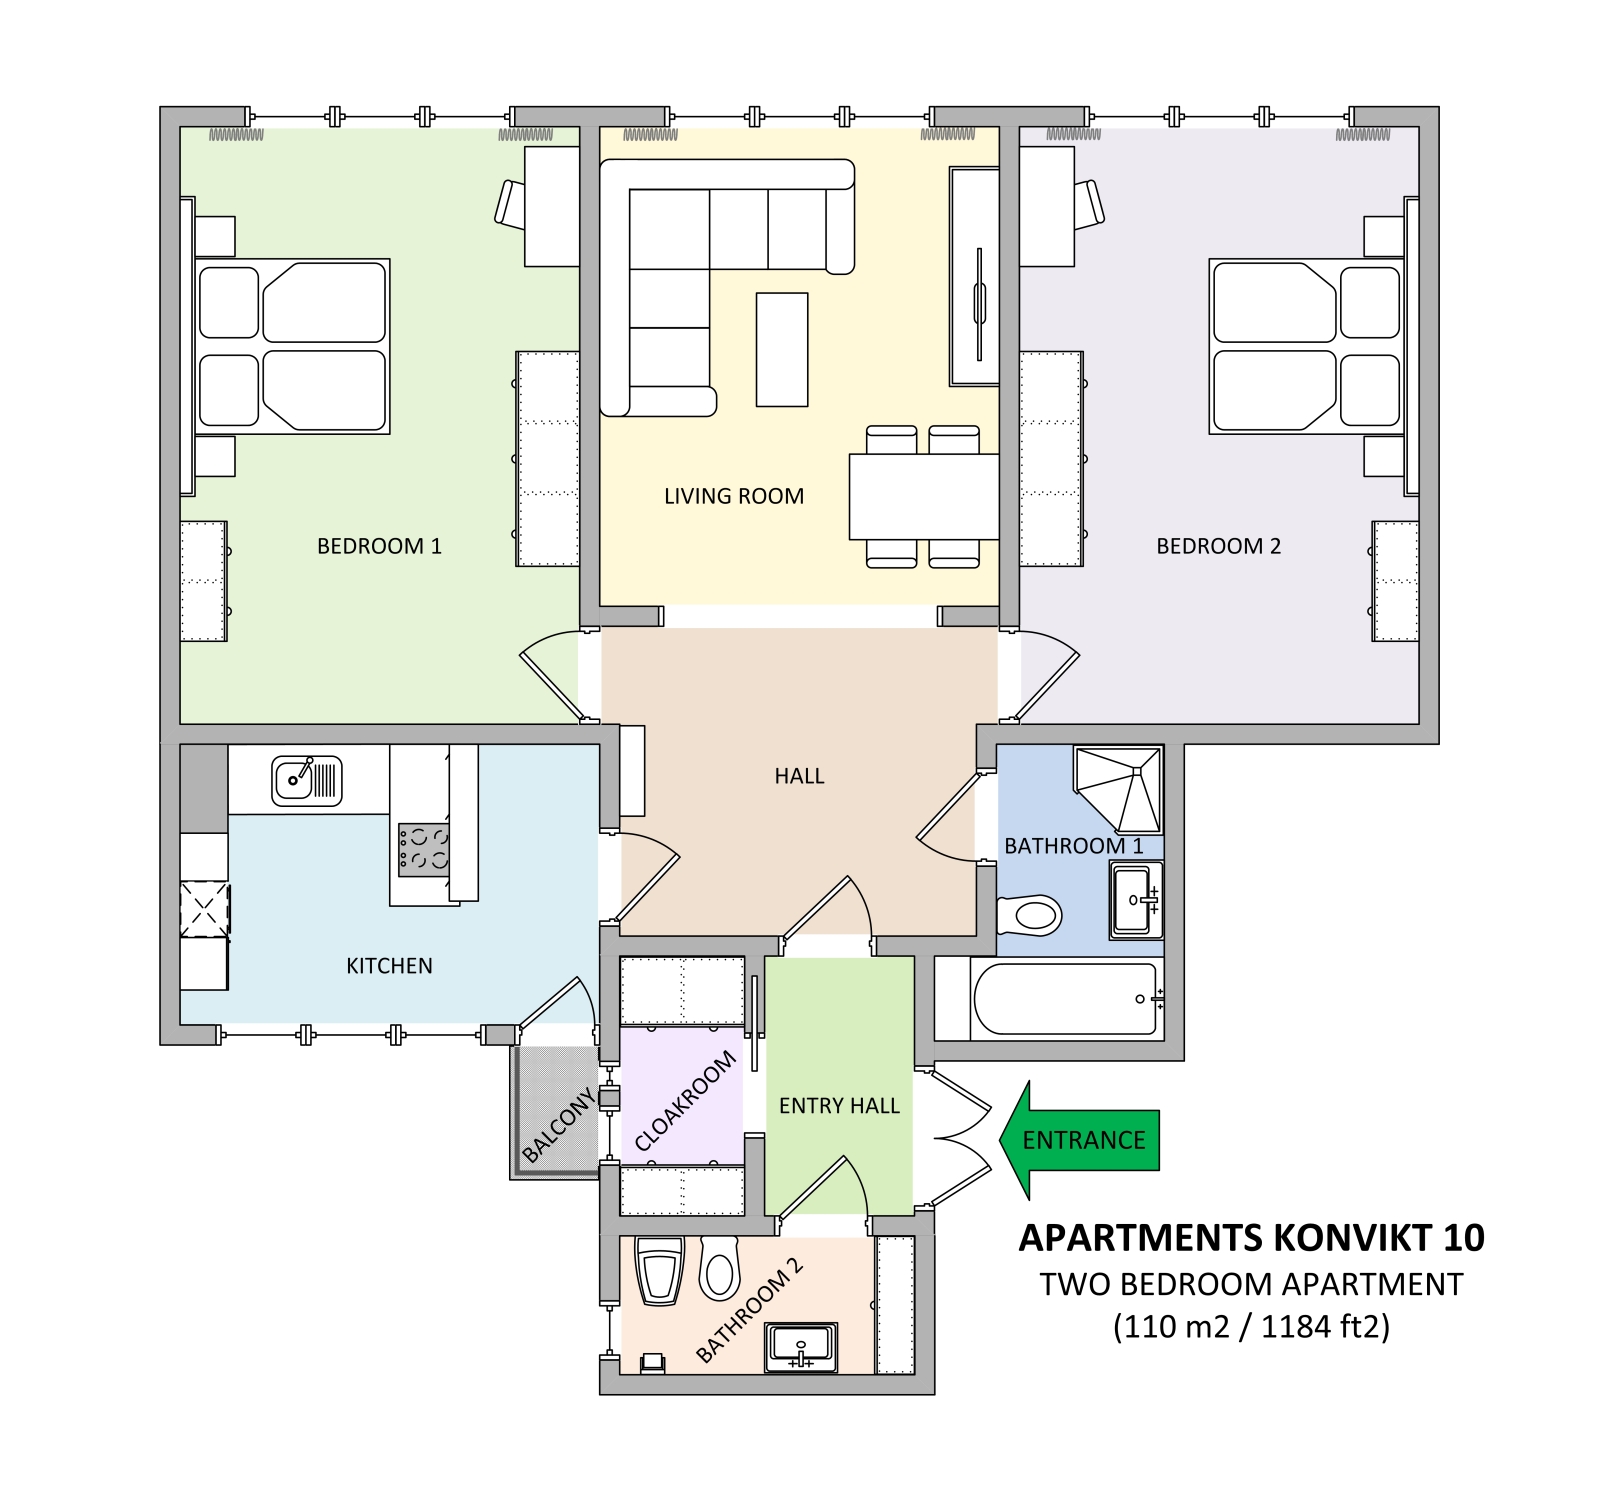 Floorplan of apartment 21 in Apartments Konvikt 10 residence in Prague